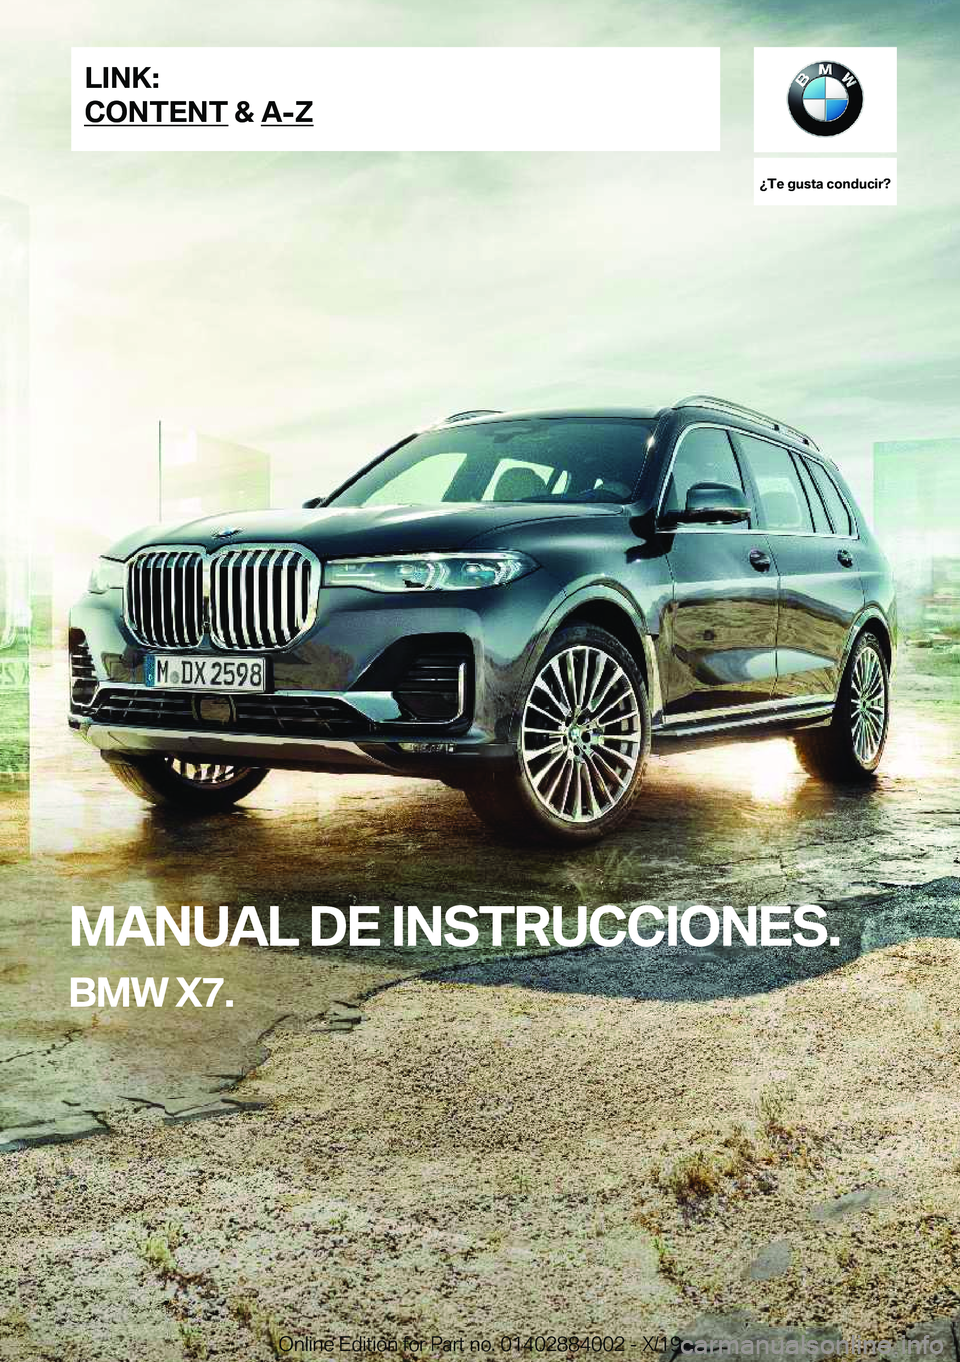 BMW X7 2020  Manuales de Empleo (in Spanish) ��T�e��g�u�s�t�a��c�o�n�d�u�c�i�r� 
�M�A�N�U�A�L��D�E��I�N�S�T�R�U�C�C�I�O�N�E�S�.
�B�M�W��X�7�.�L�I�N�K�:
�C�O�N�T�E�N�T��&��A�-�Z�O�n�l�i�n�e��E�d�i�t�i�o�n��f�o�r��P�a�r�t��n�o�.��0�1�